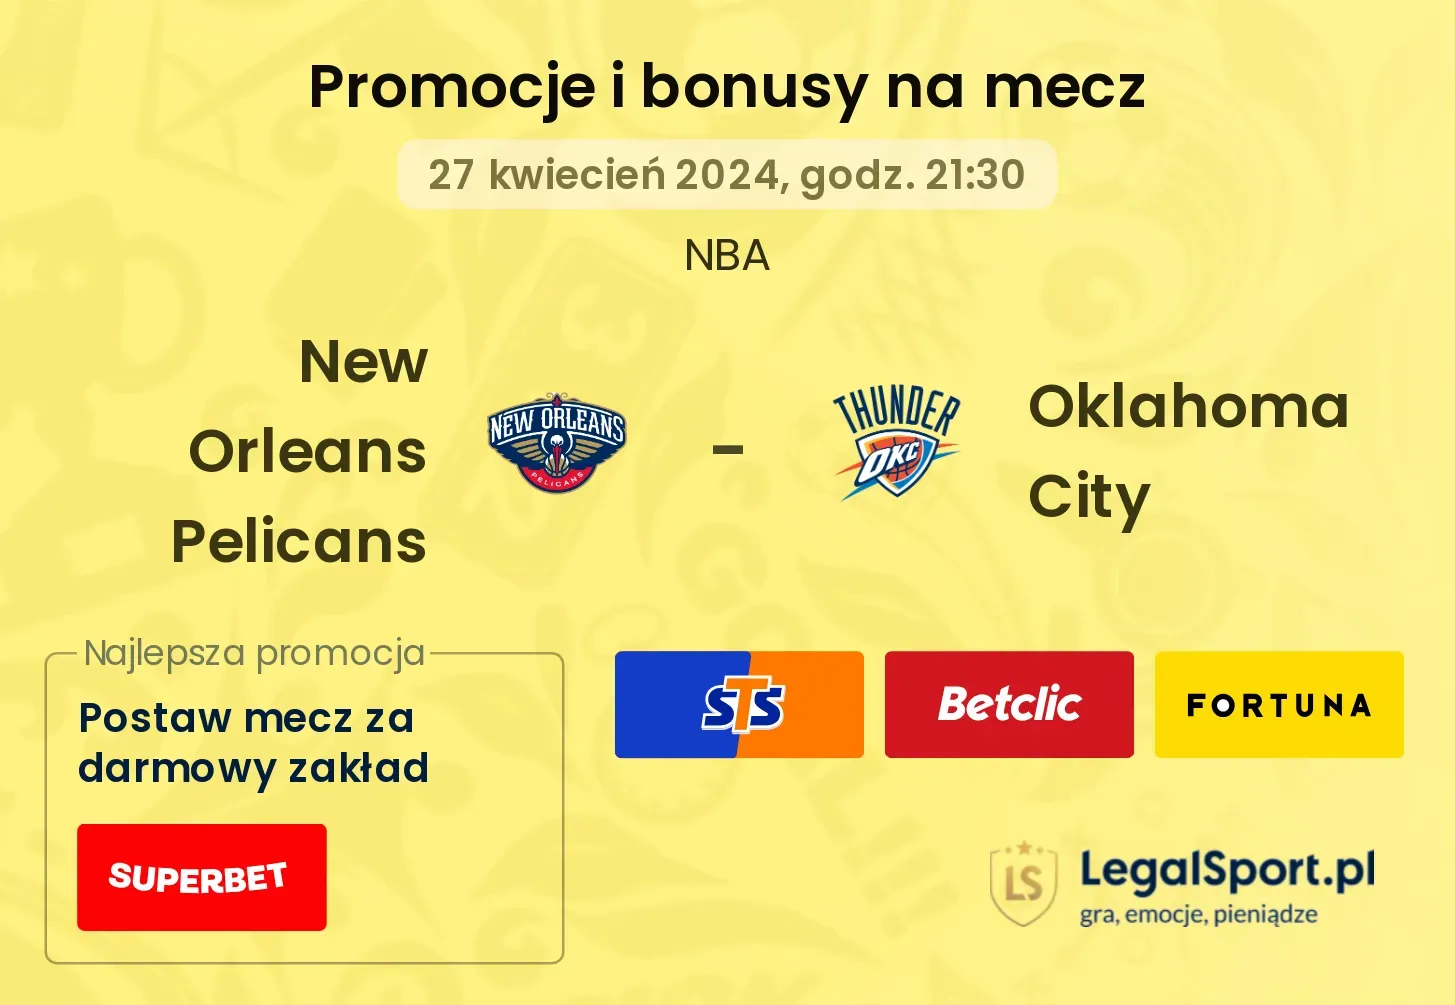 New Orleans Pelicans - Oklahoma City promocje bonusy na mecz